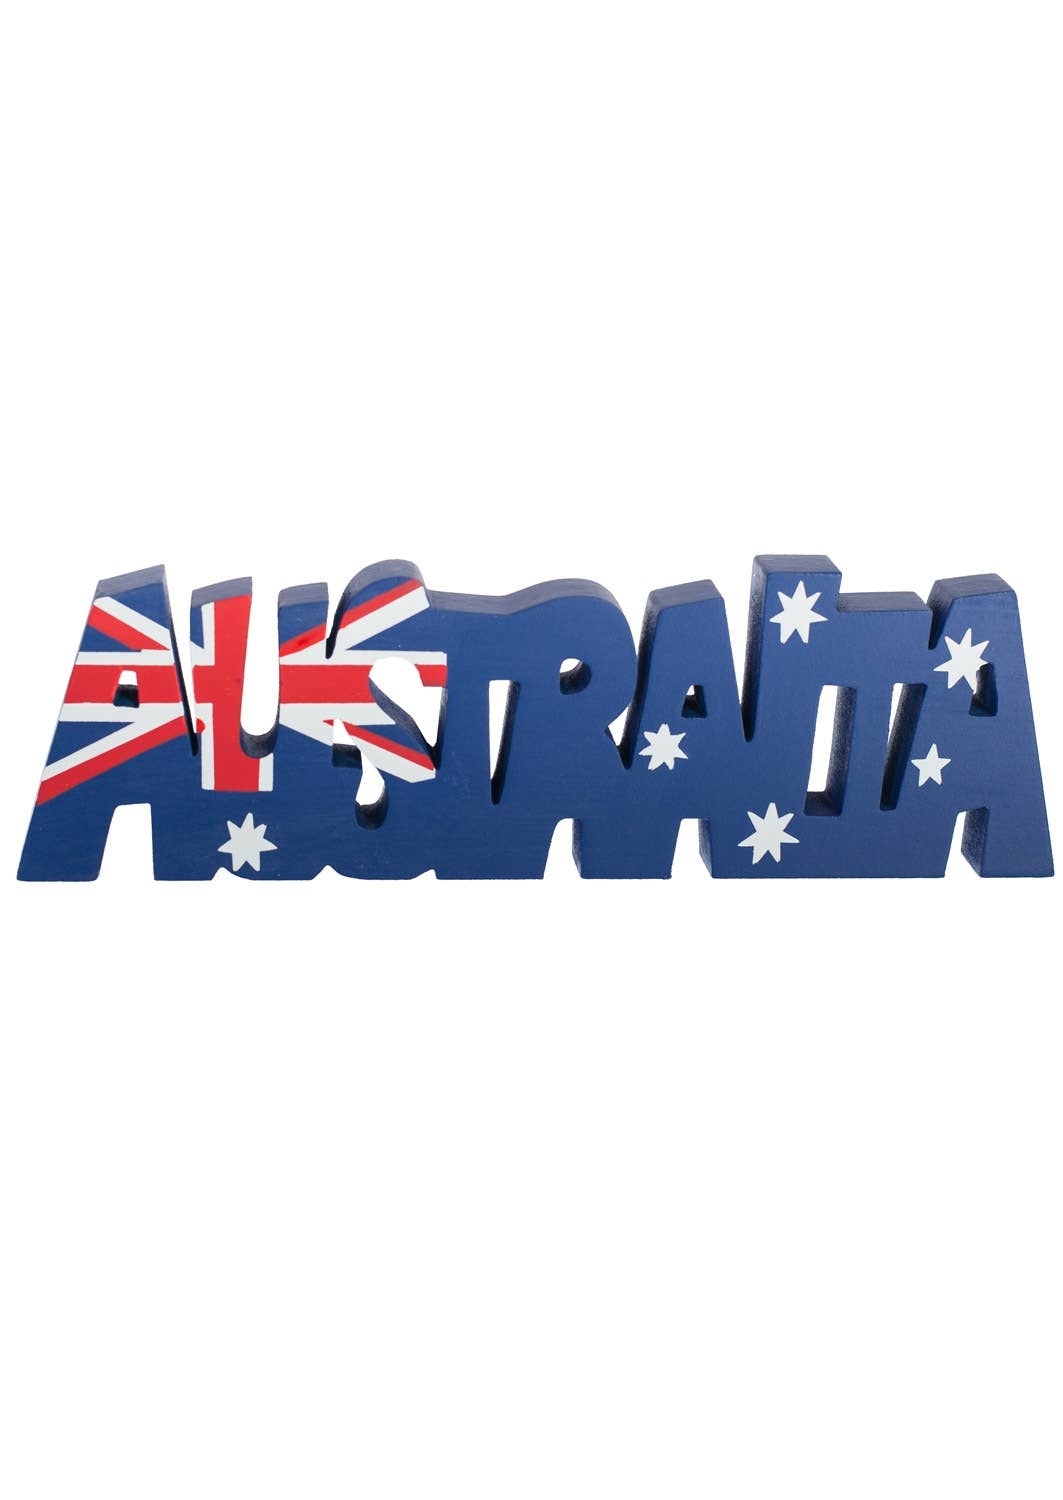 Australia Flag Wooden Australia Day Table Decoration - Main Image